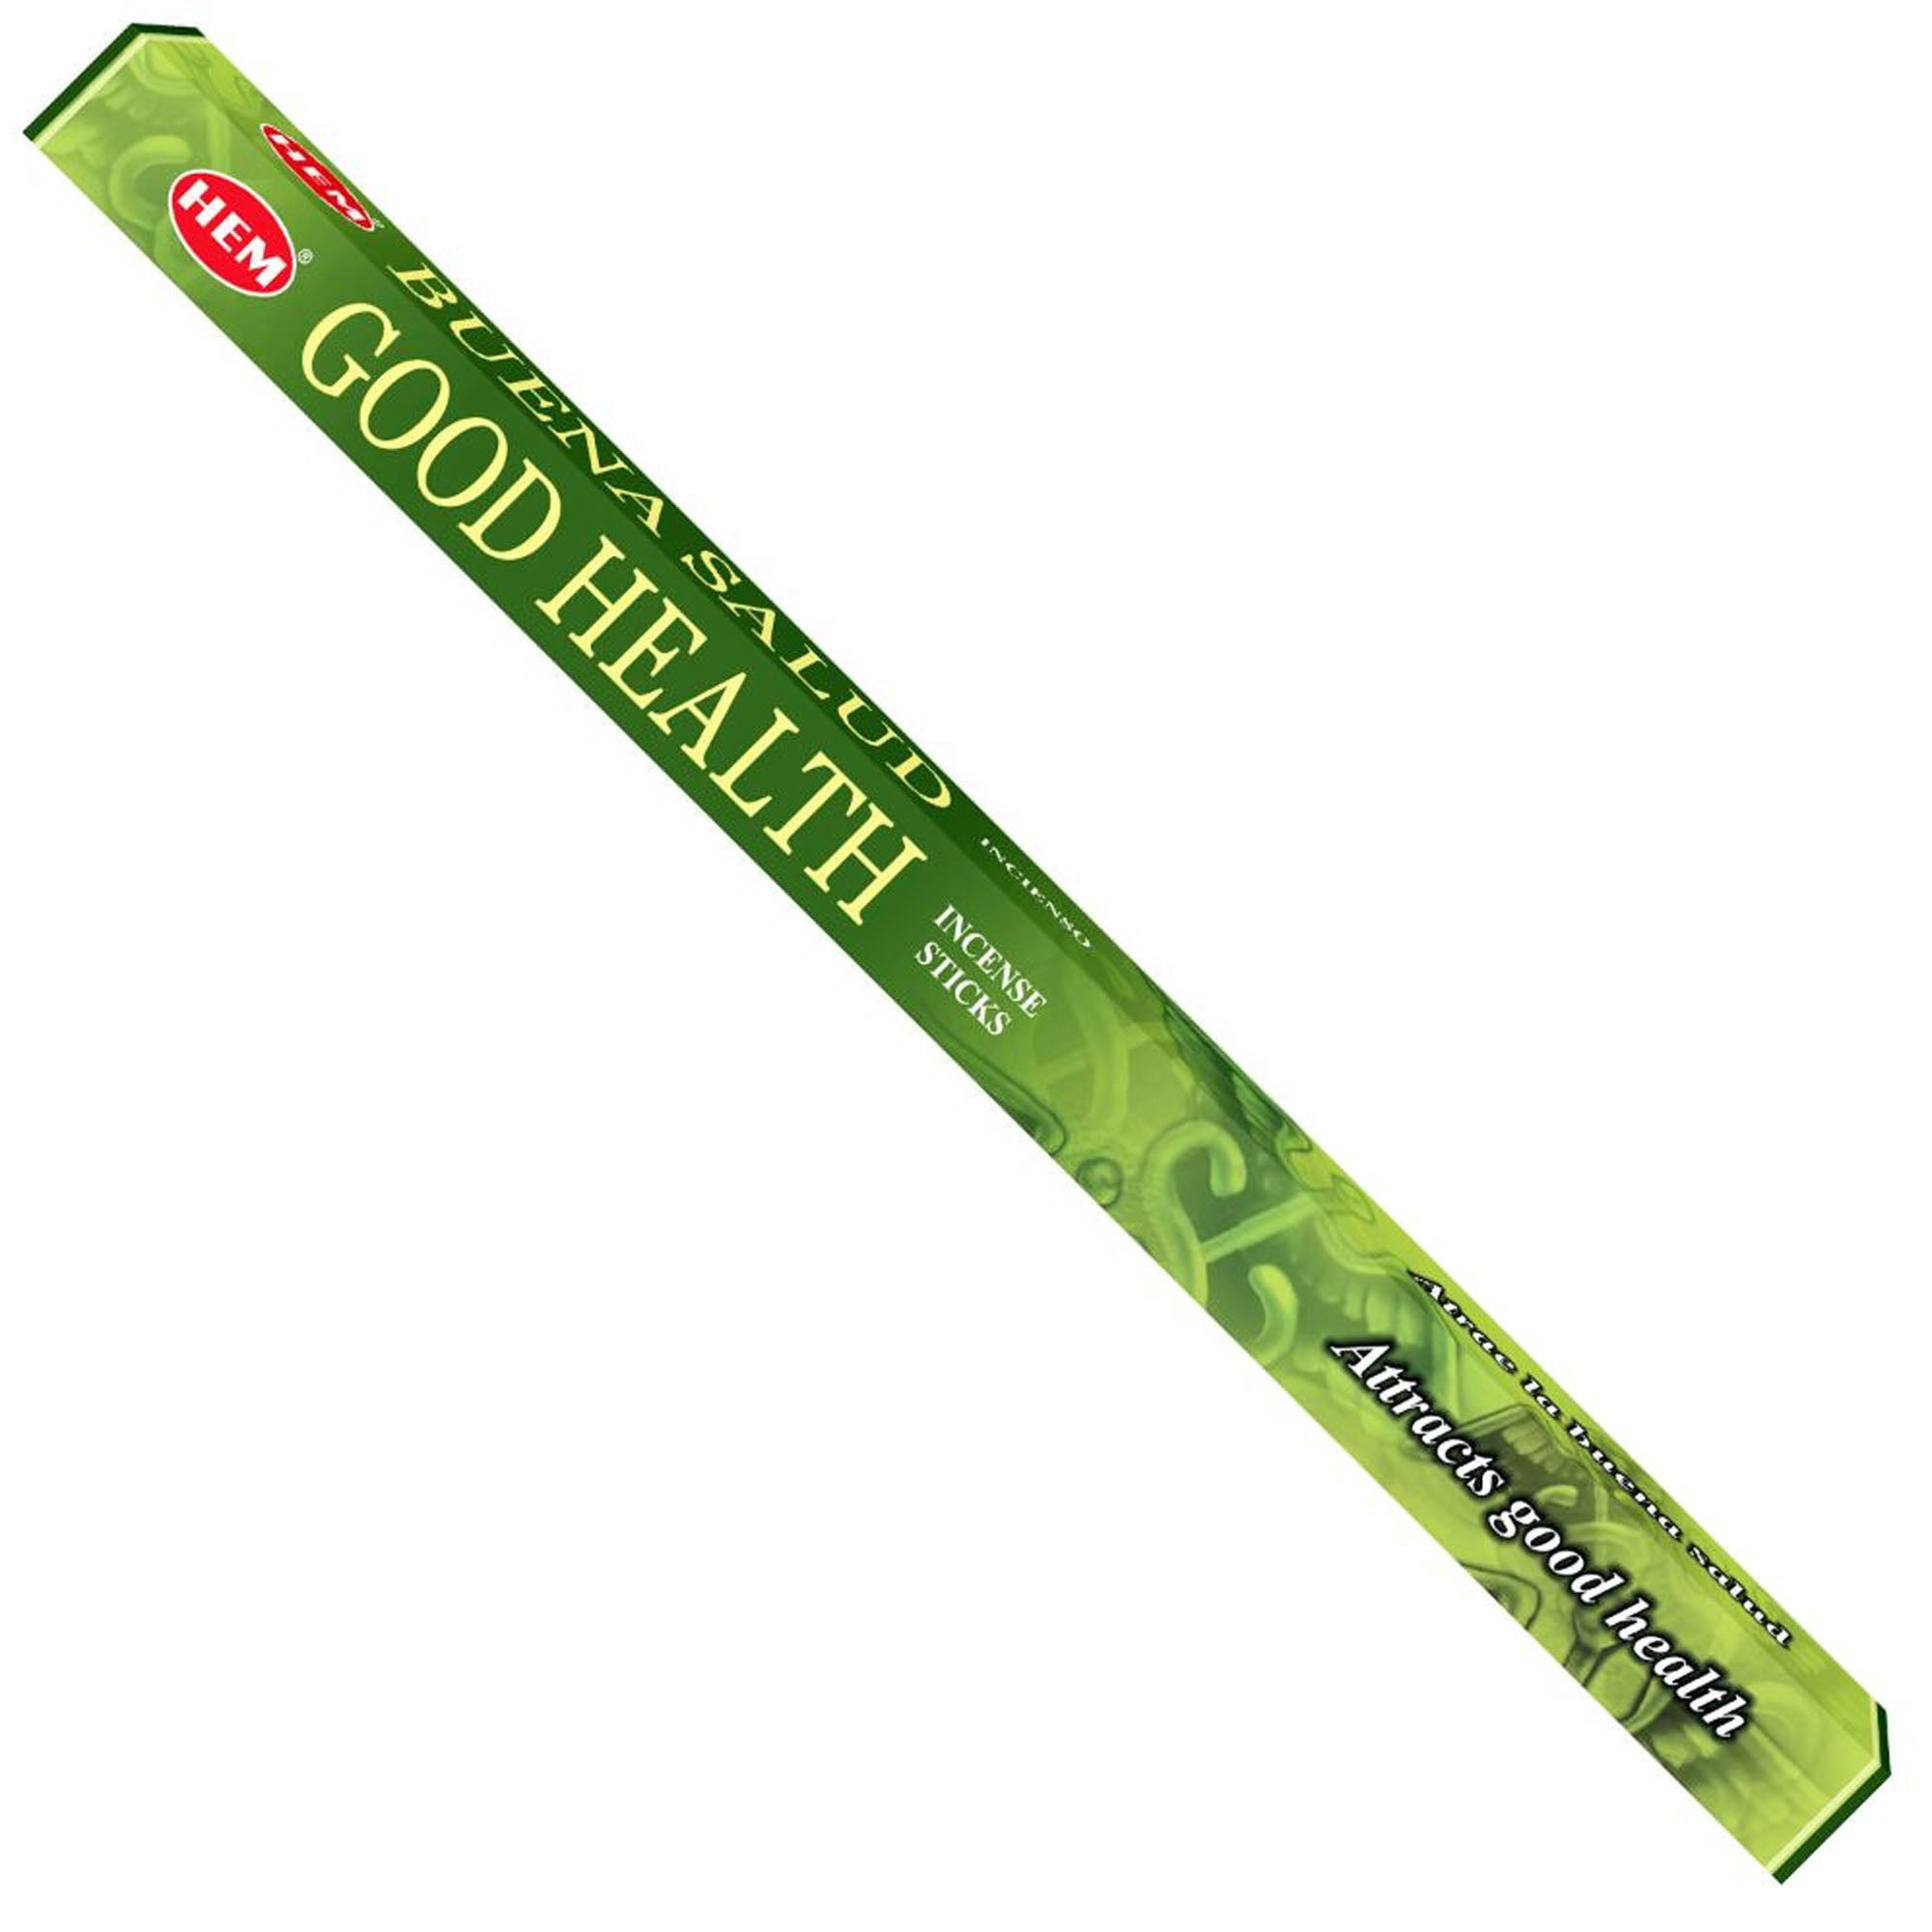 Hem - Square - Good Health Incense Sticks